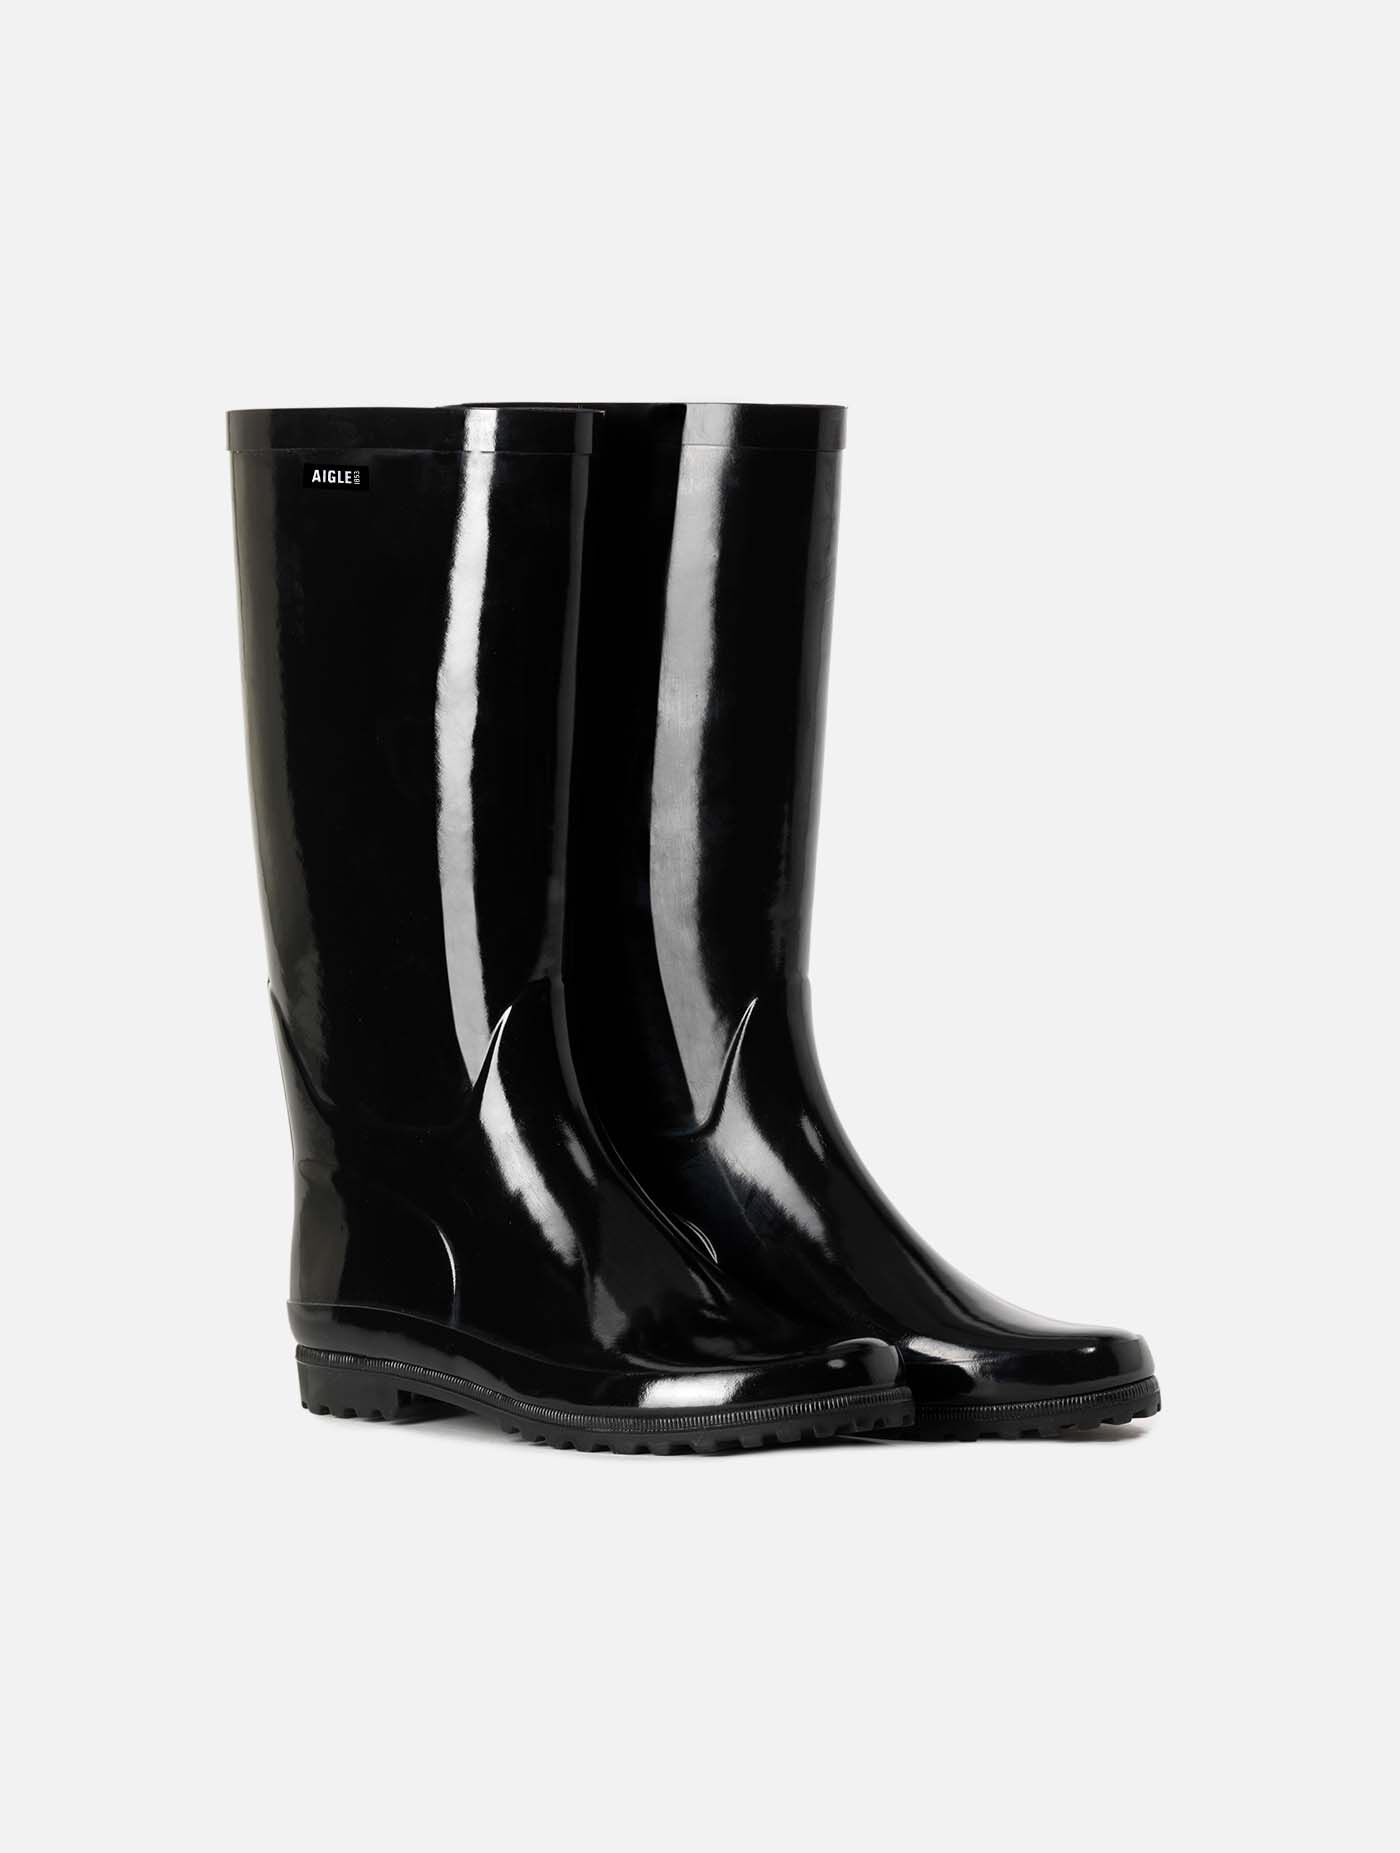 Aigle Aiglentine 2 Wellingtons Womens Ladies Black Wellies Rain Boots Size 4-7.5 